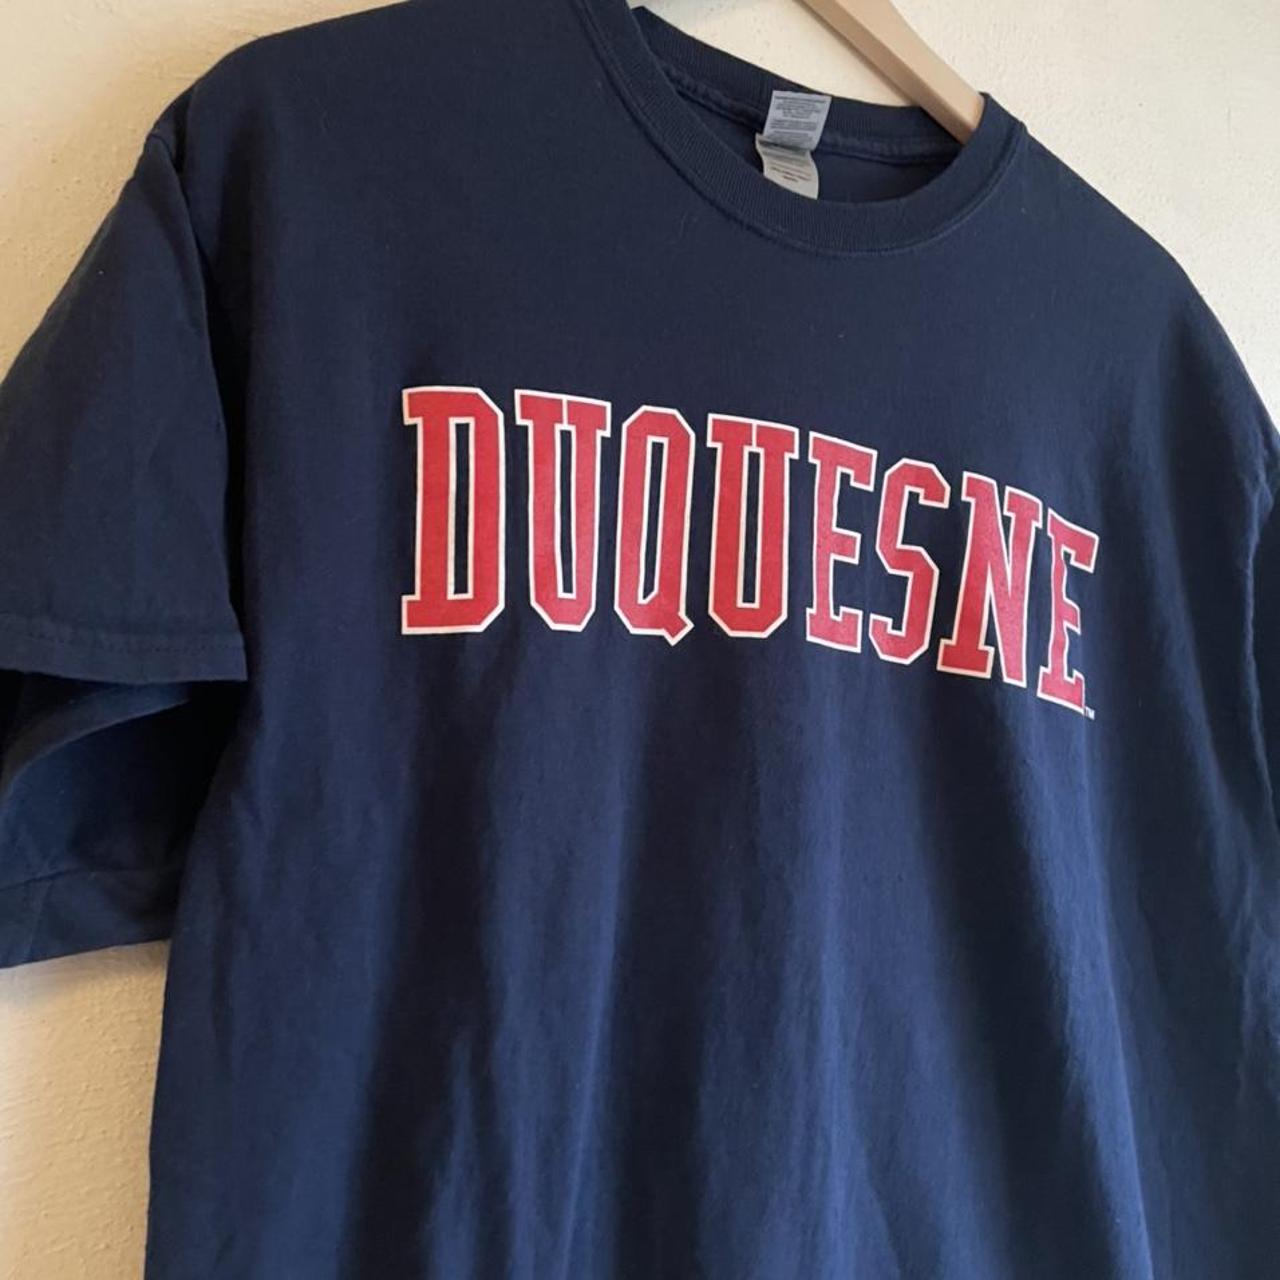 Duquesne University Collegiate Tee Size... - Depop